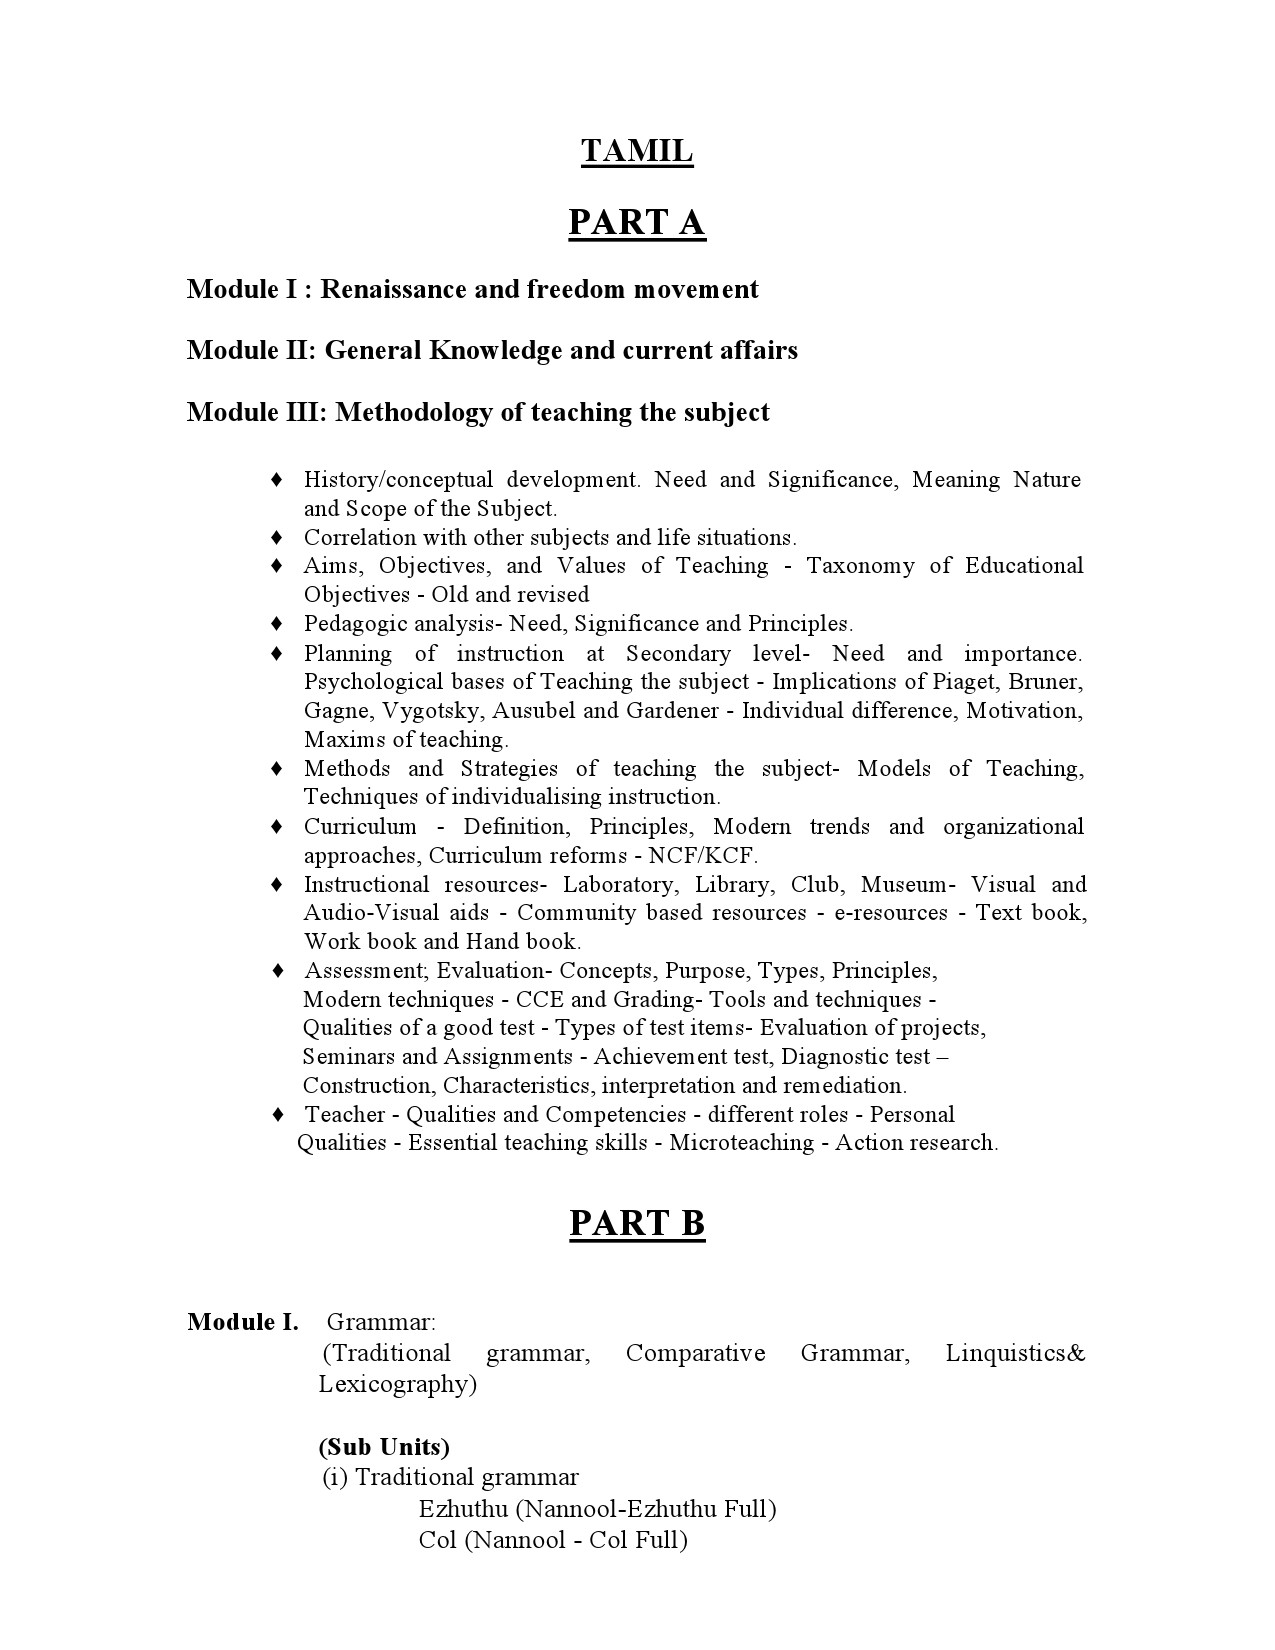 High School Assistant Tamil Part A Kerala Examination Syllabus 2021 - Notification Image 1